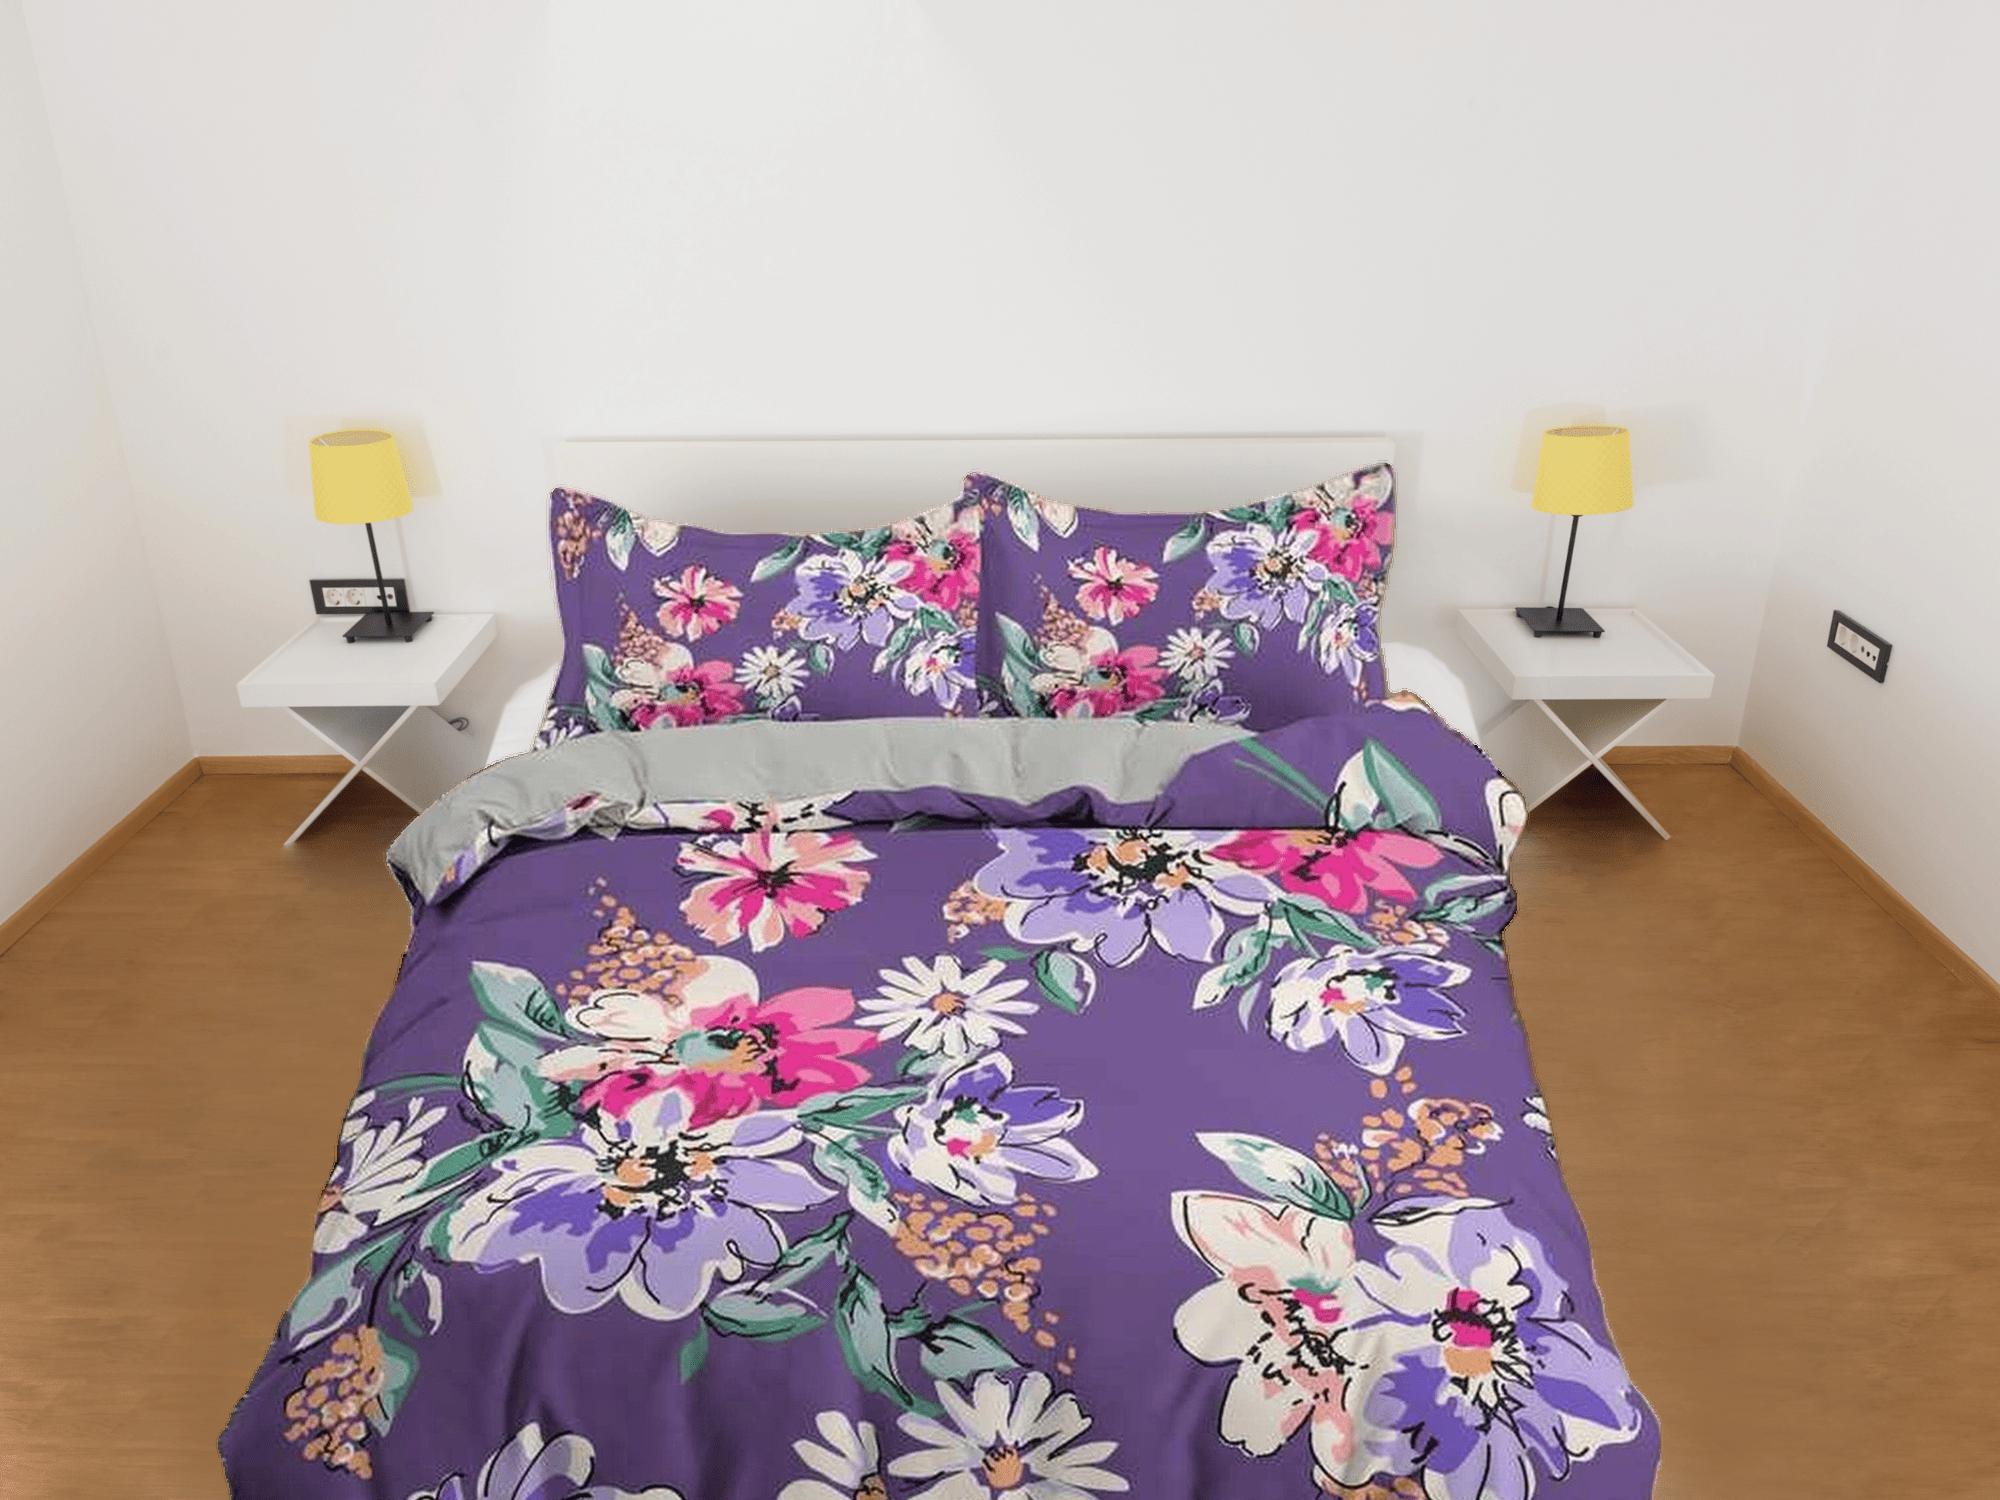 daintyduvet Purple floral duvet cover colorful bedding, teen girl bedroom, baby girl crib bedding boho maximalist aesthetic shabby chic bedding